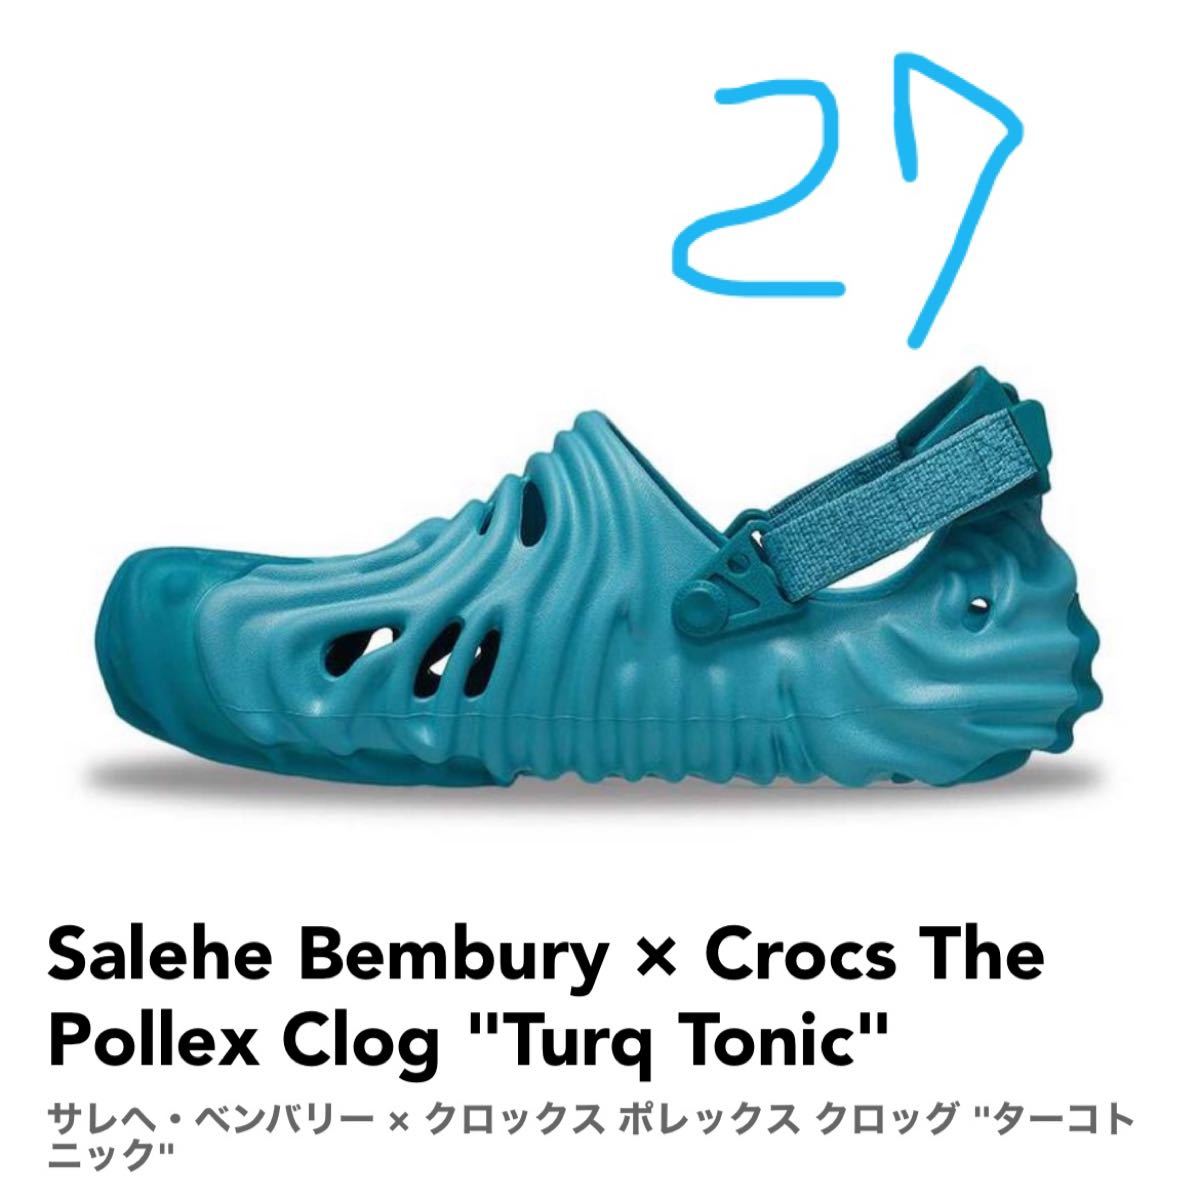 Salehe Bembury × Crocs The Pollex Clog "Turq Tonic